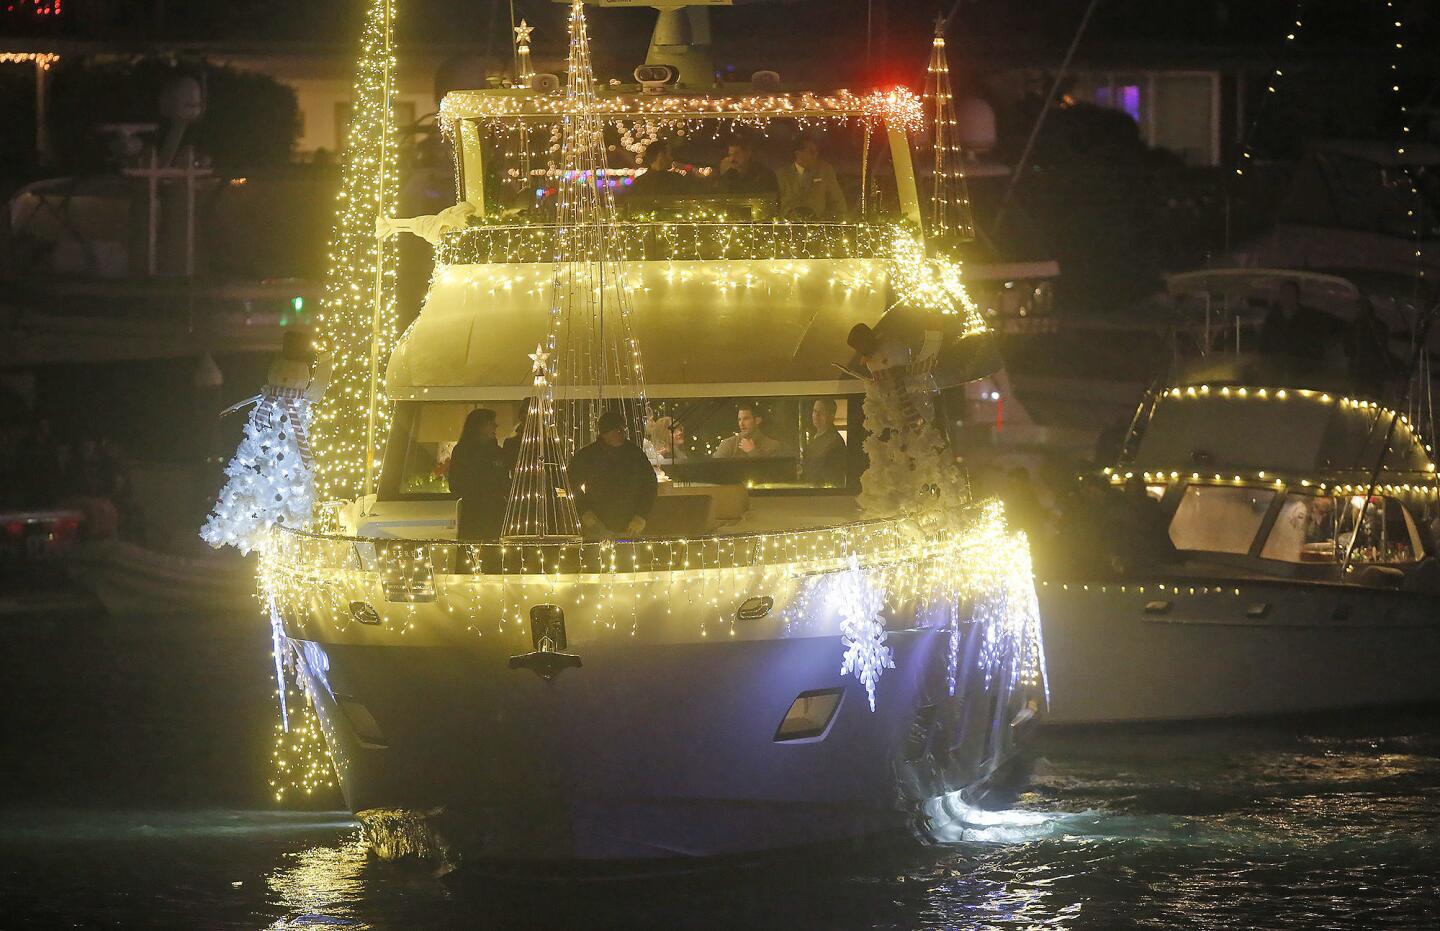 The 110th Newport Beach Christmas Boat Parade